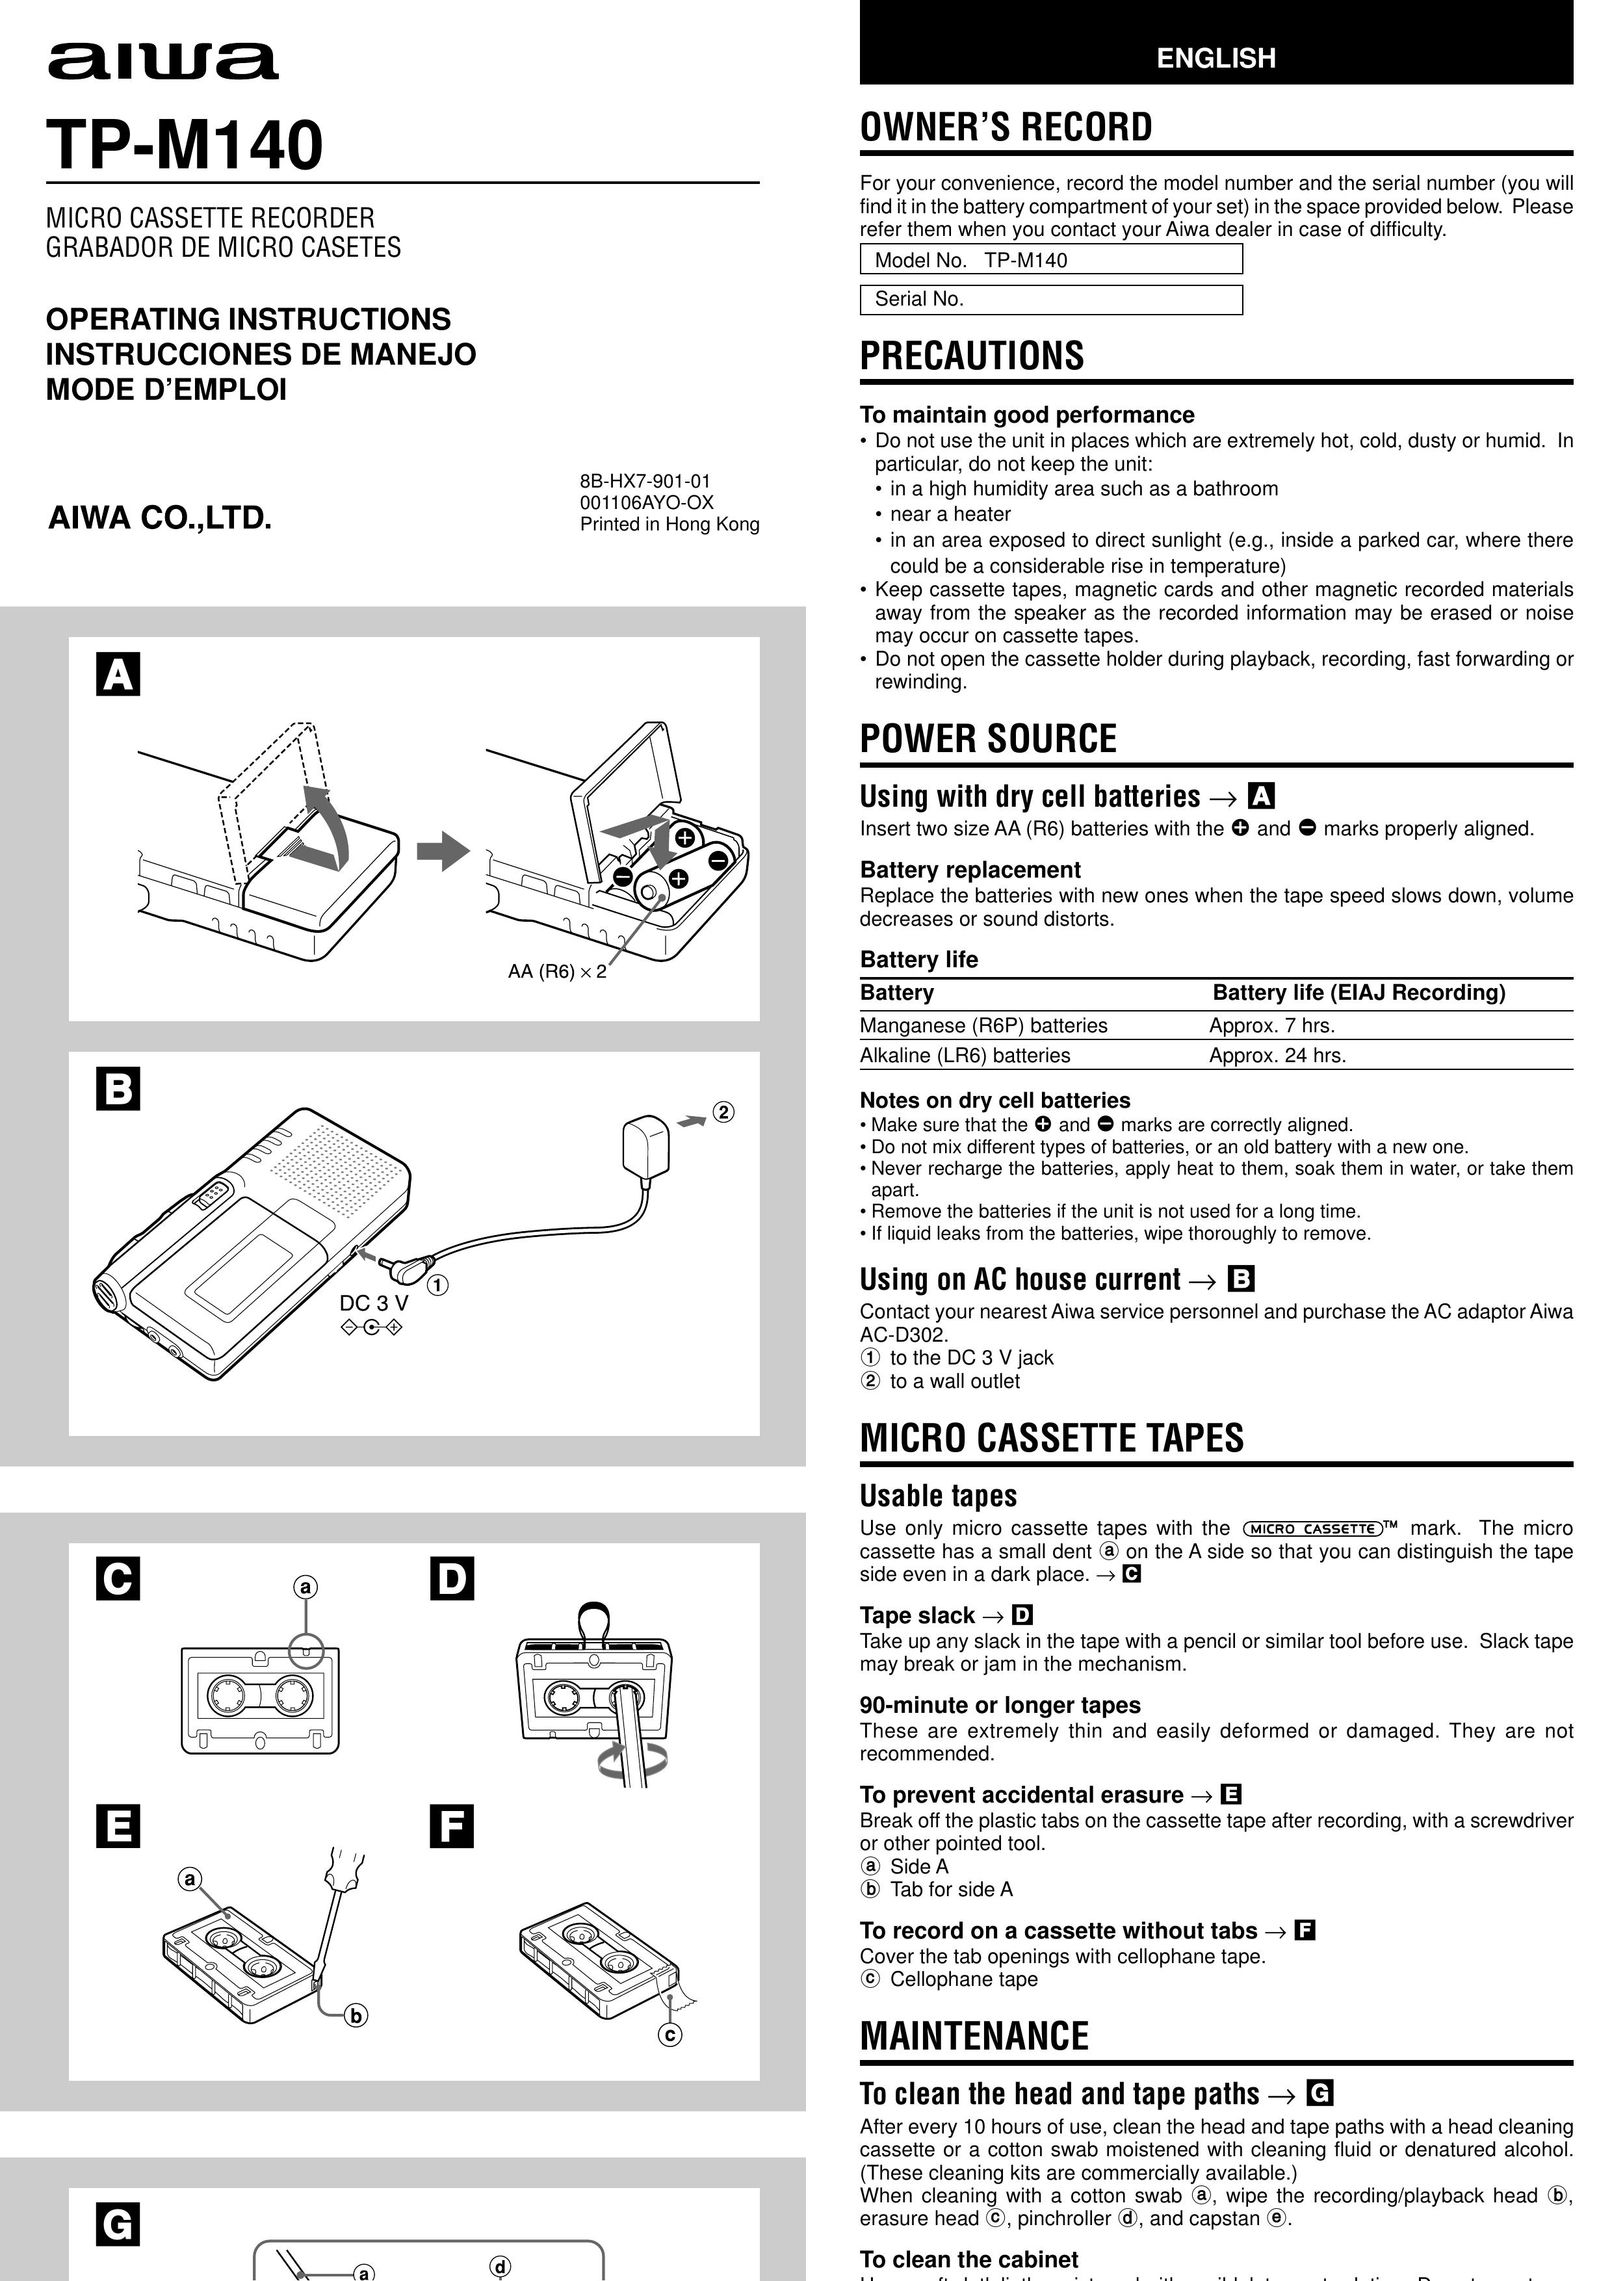 Aiwa TP-M140 Microcassette Recorder User Manual